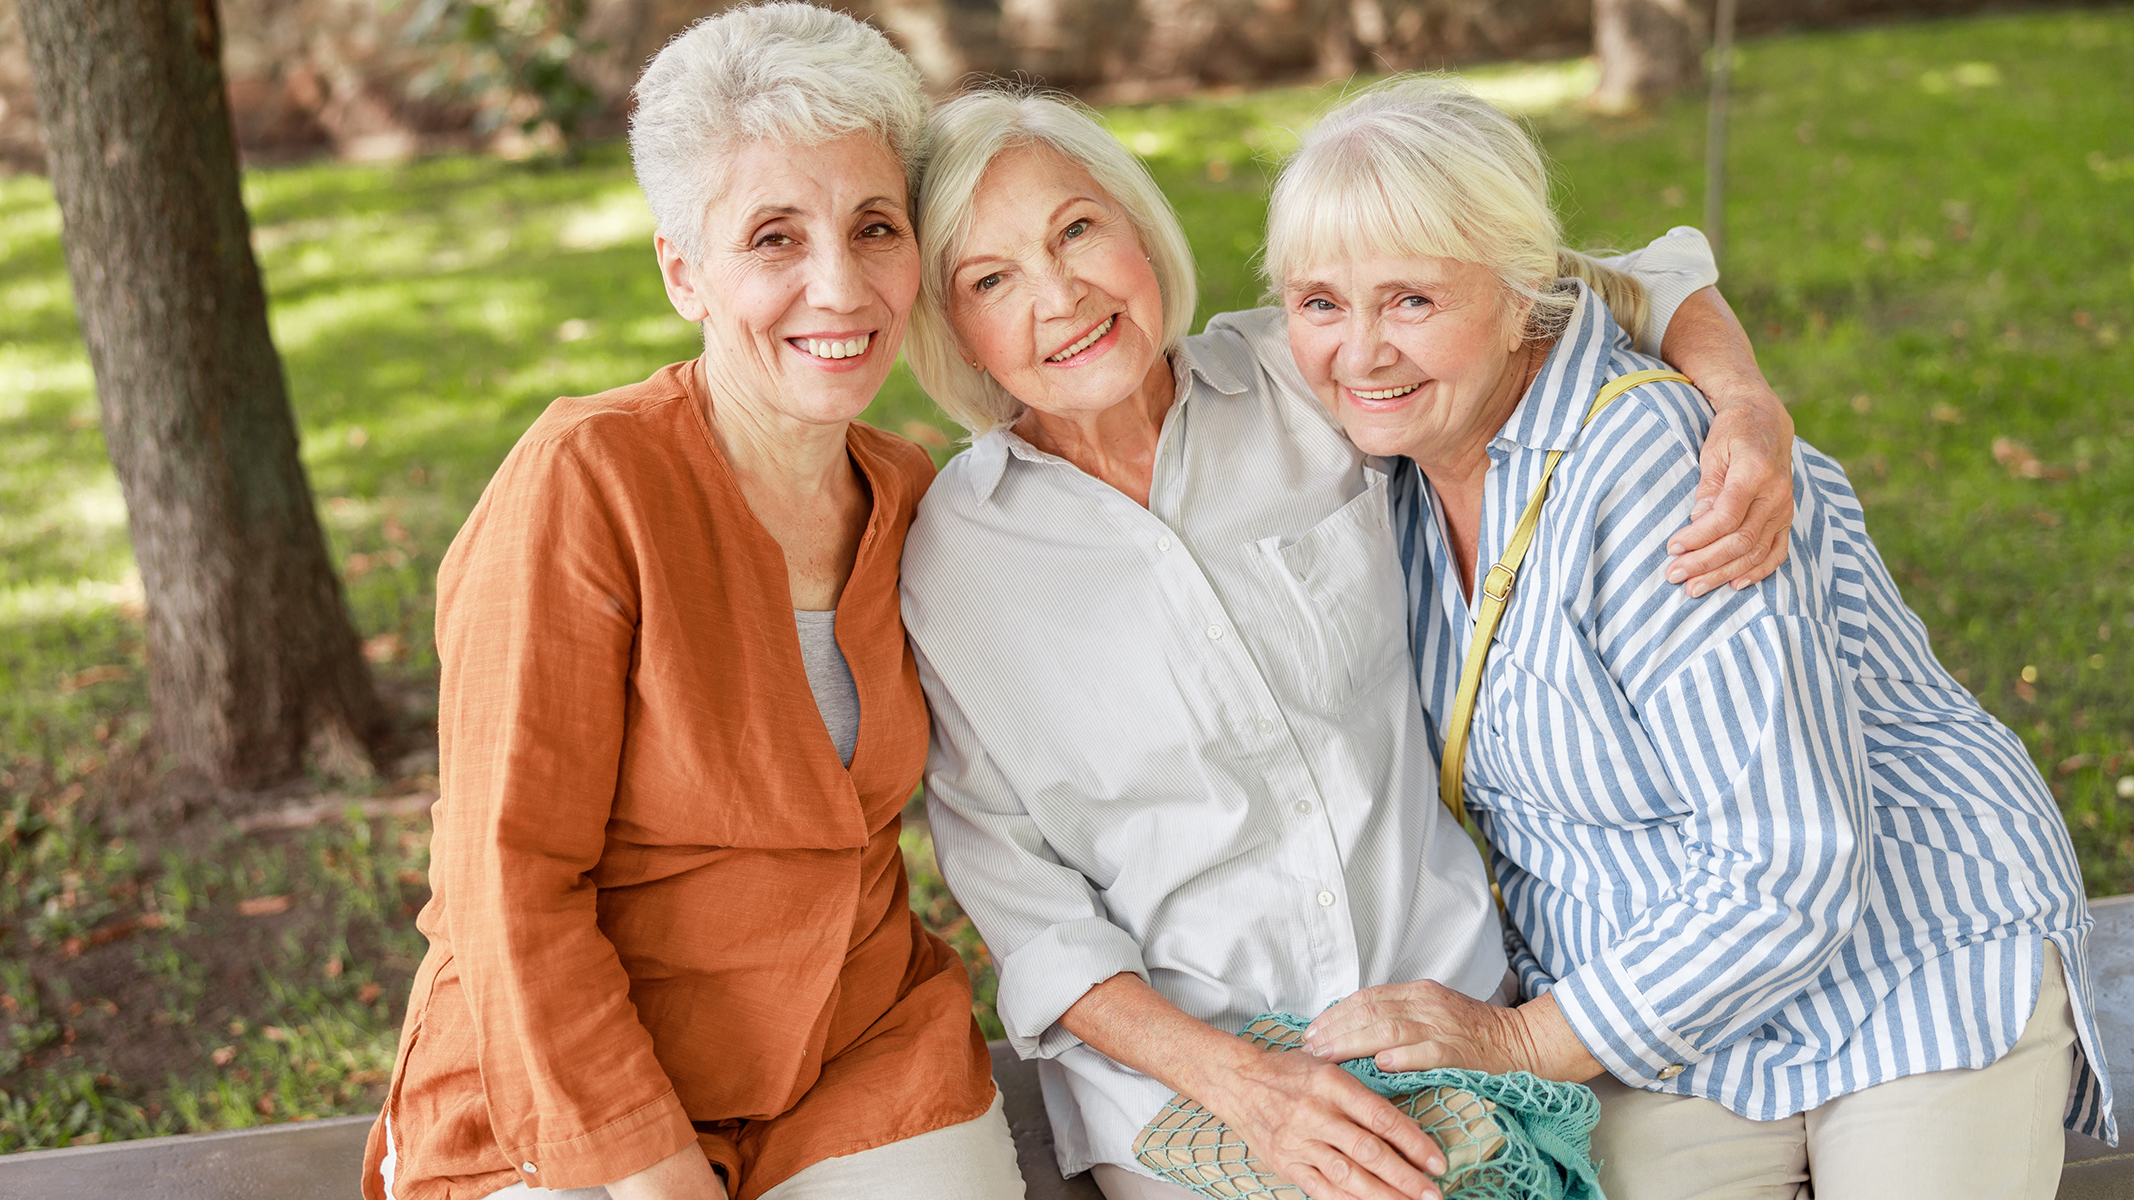  Group of three senior women smiling on park bench